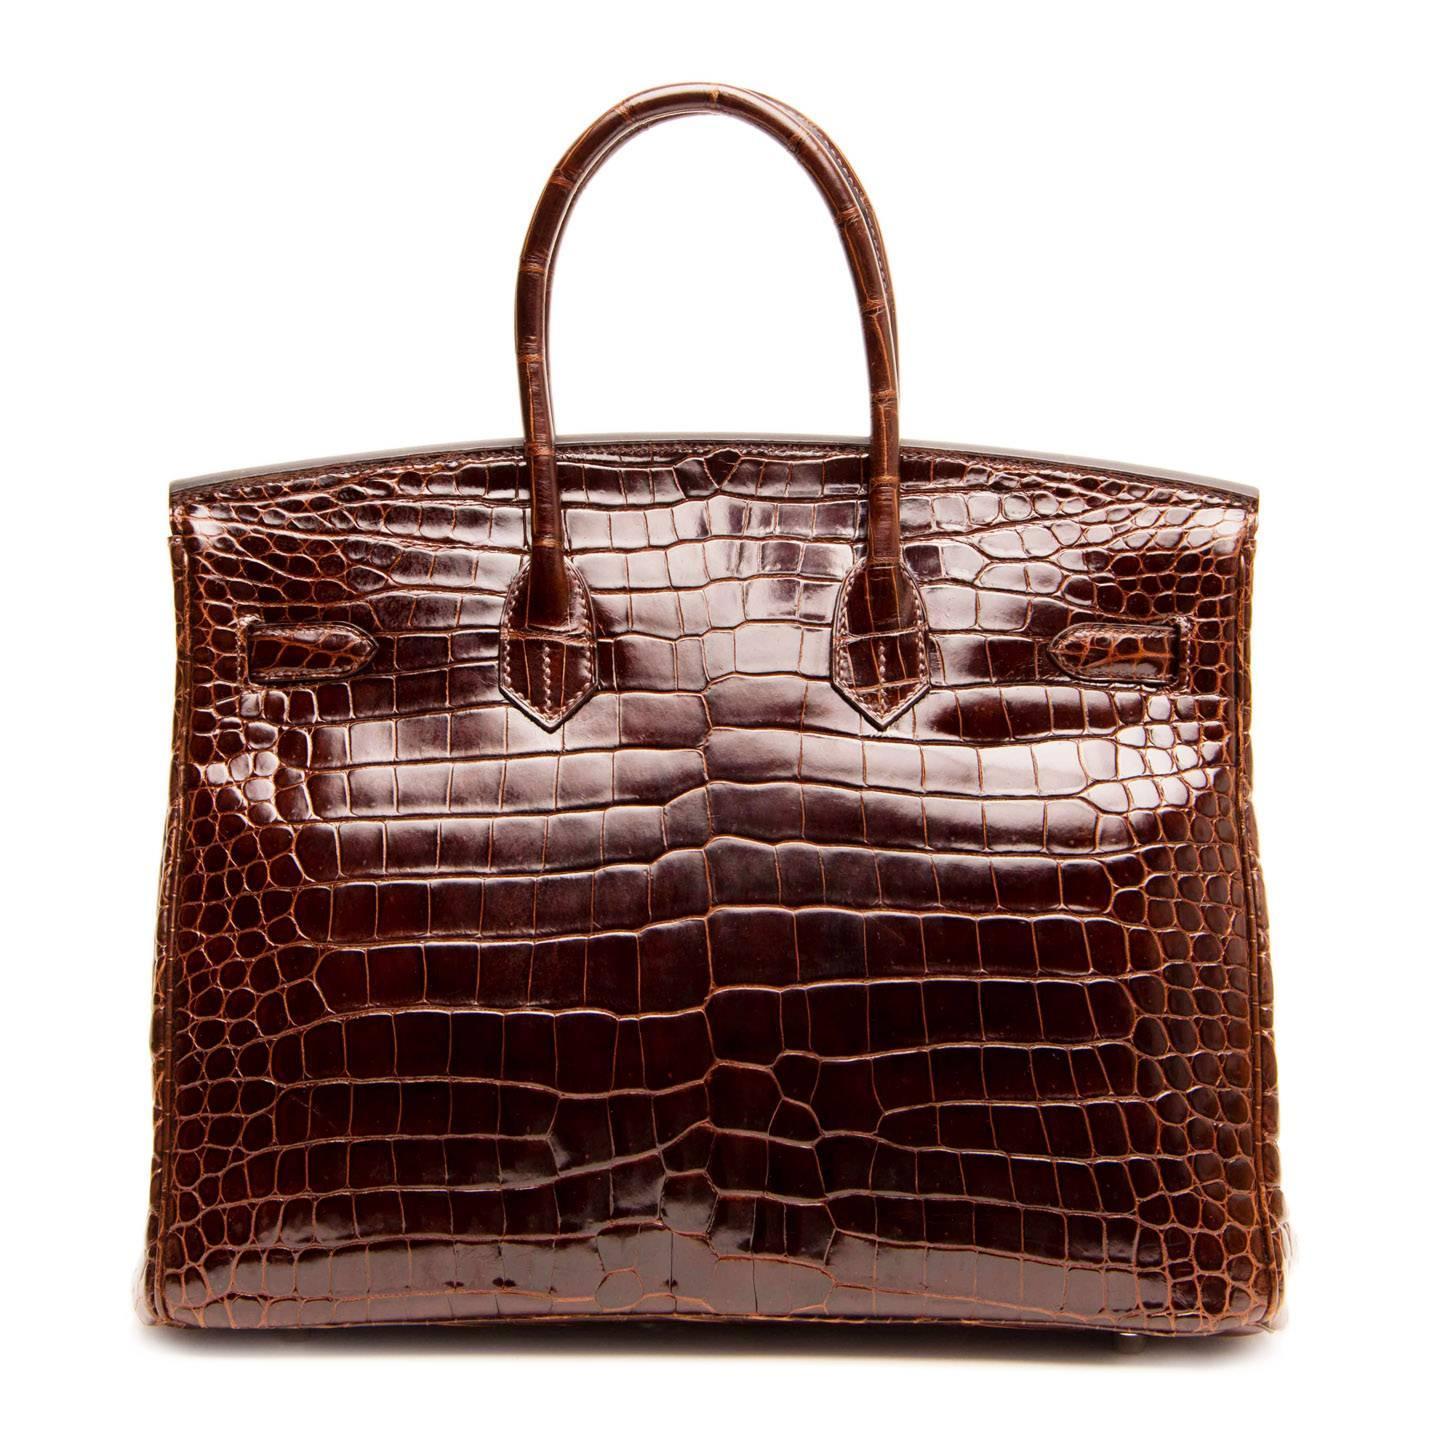 Hermès Birkin Brown Shiny Croco Bag 35 Cm For Sale at 1stdibs